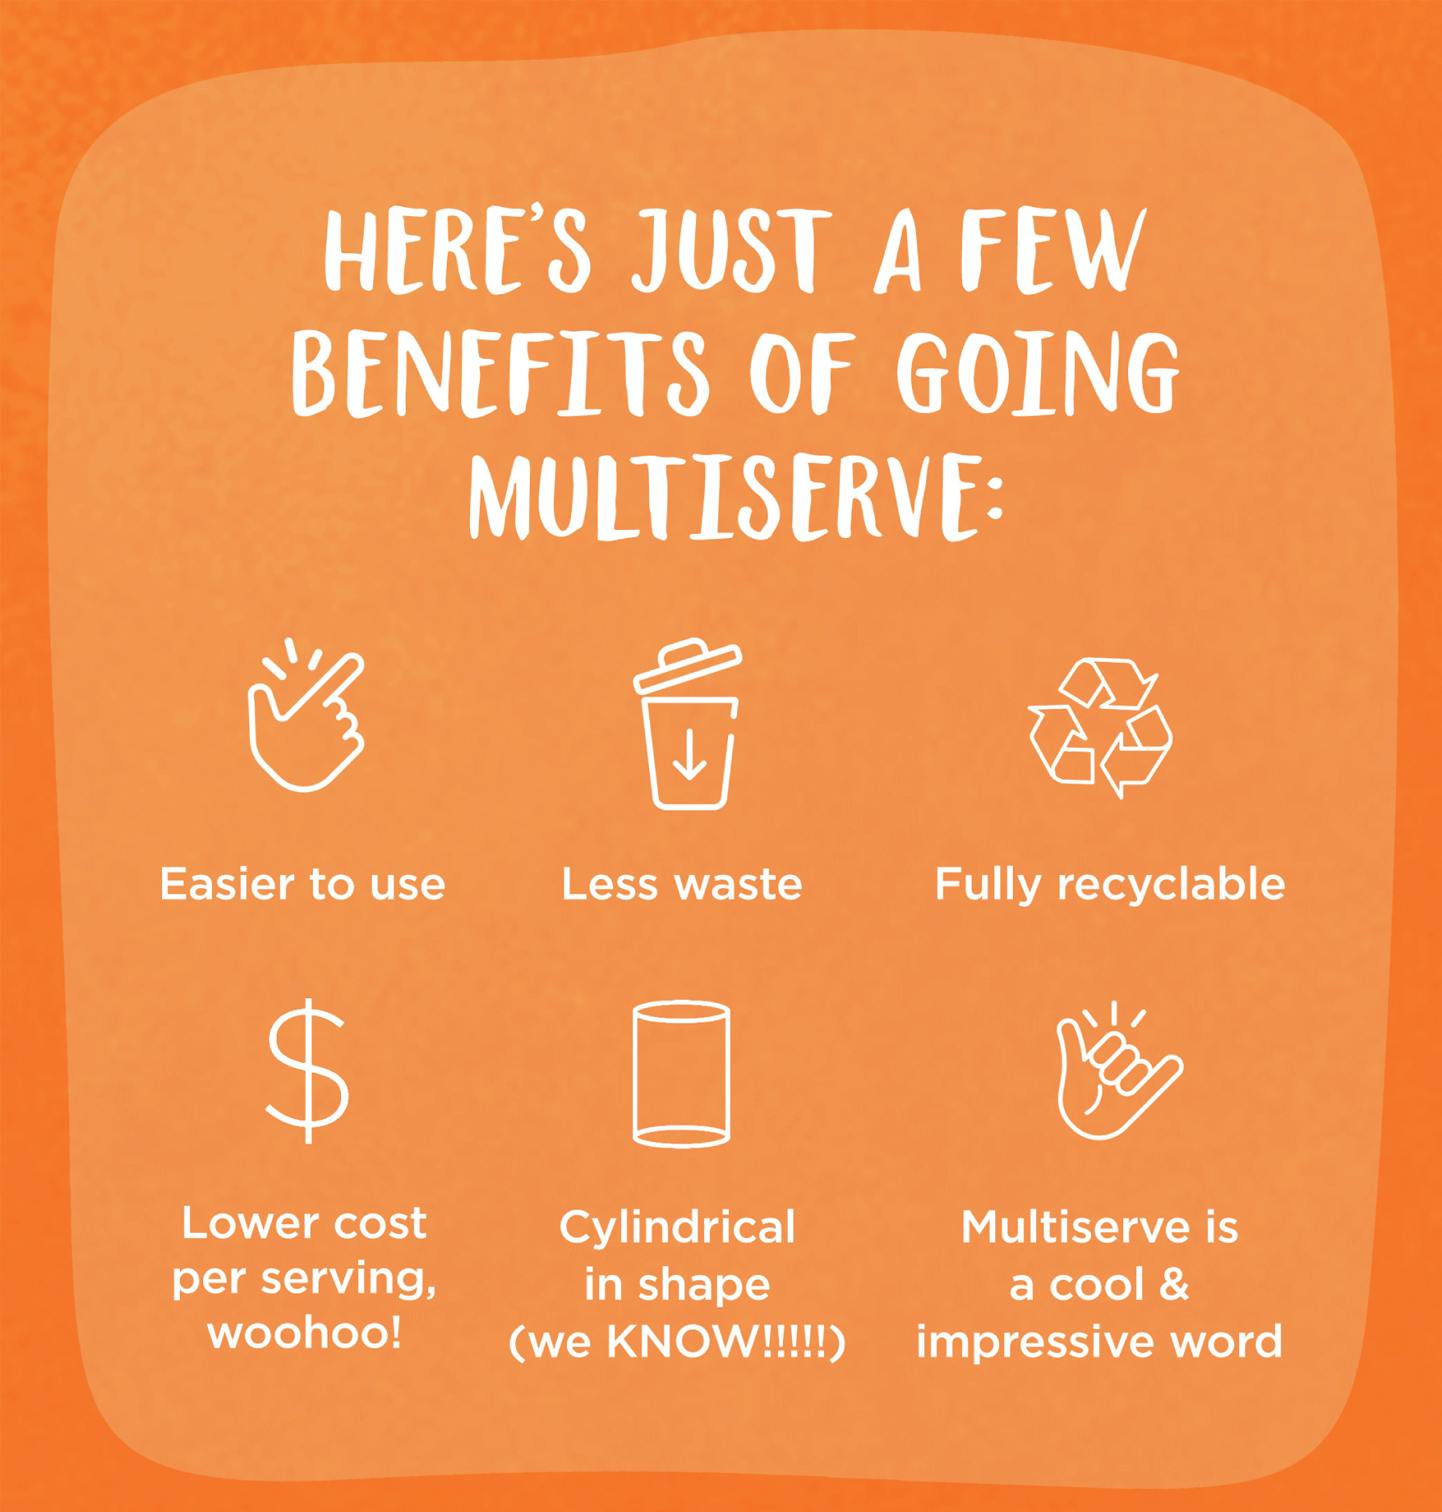 Benefits of multiserve